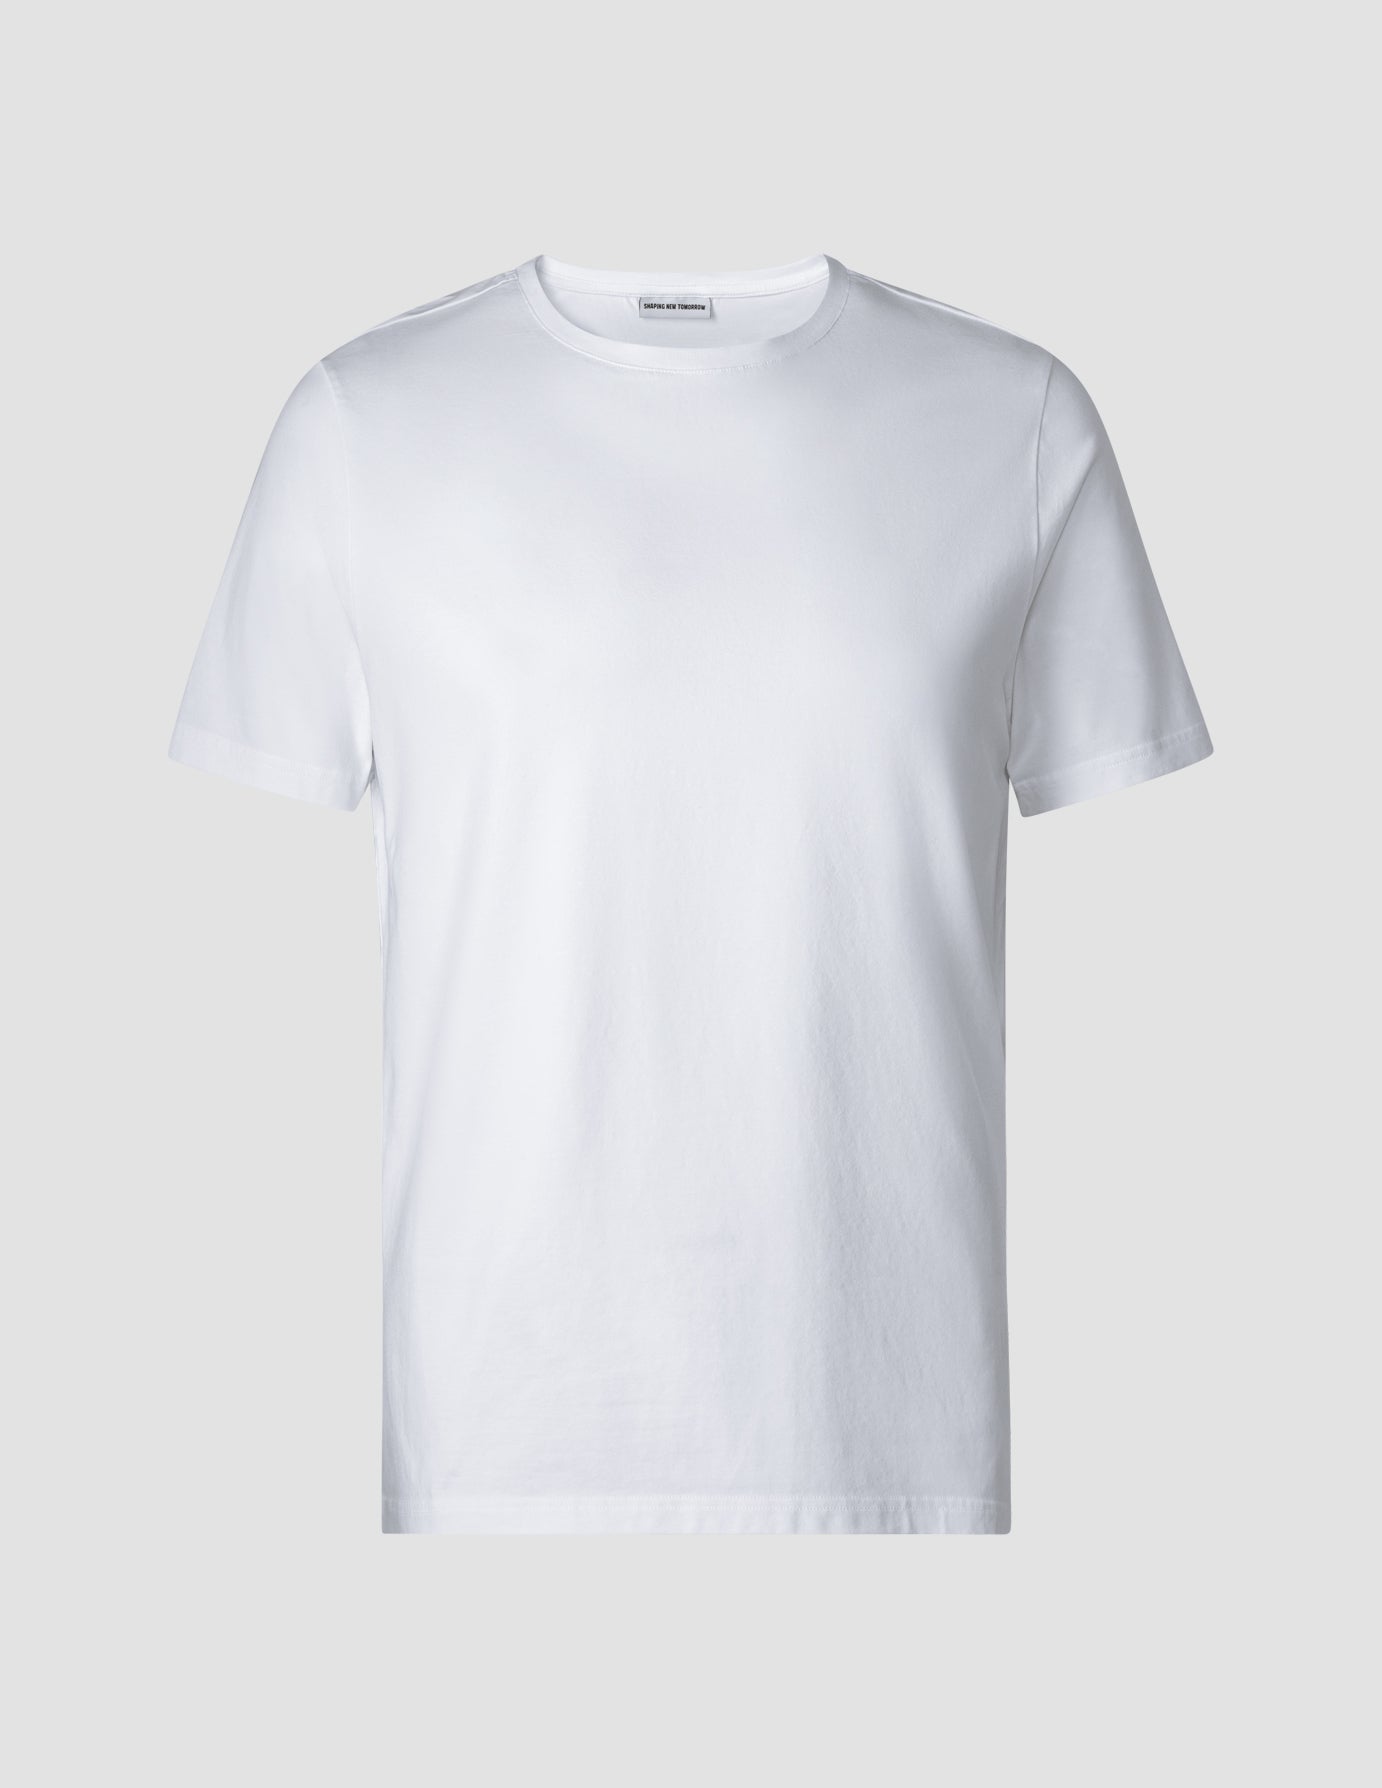 Supima T-shirt White  SHAPING NEW TOMORROW